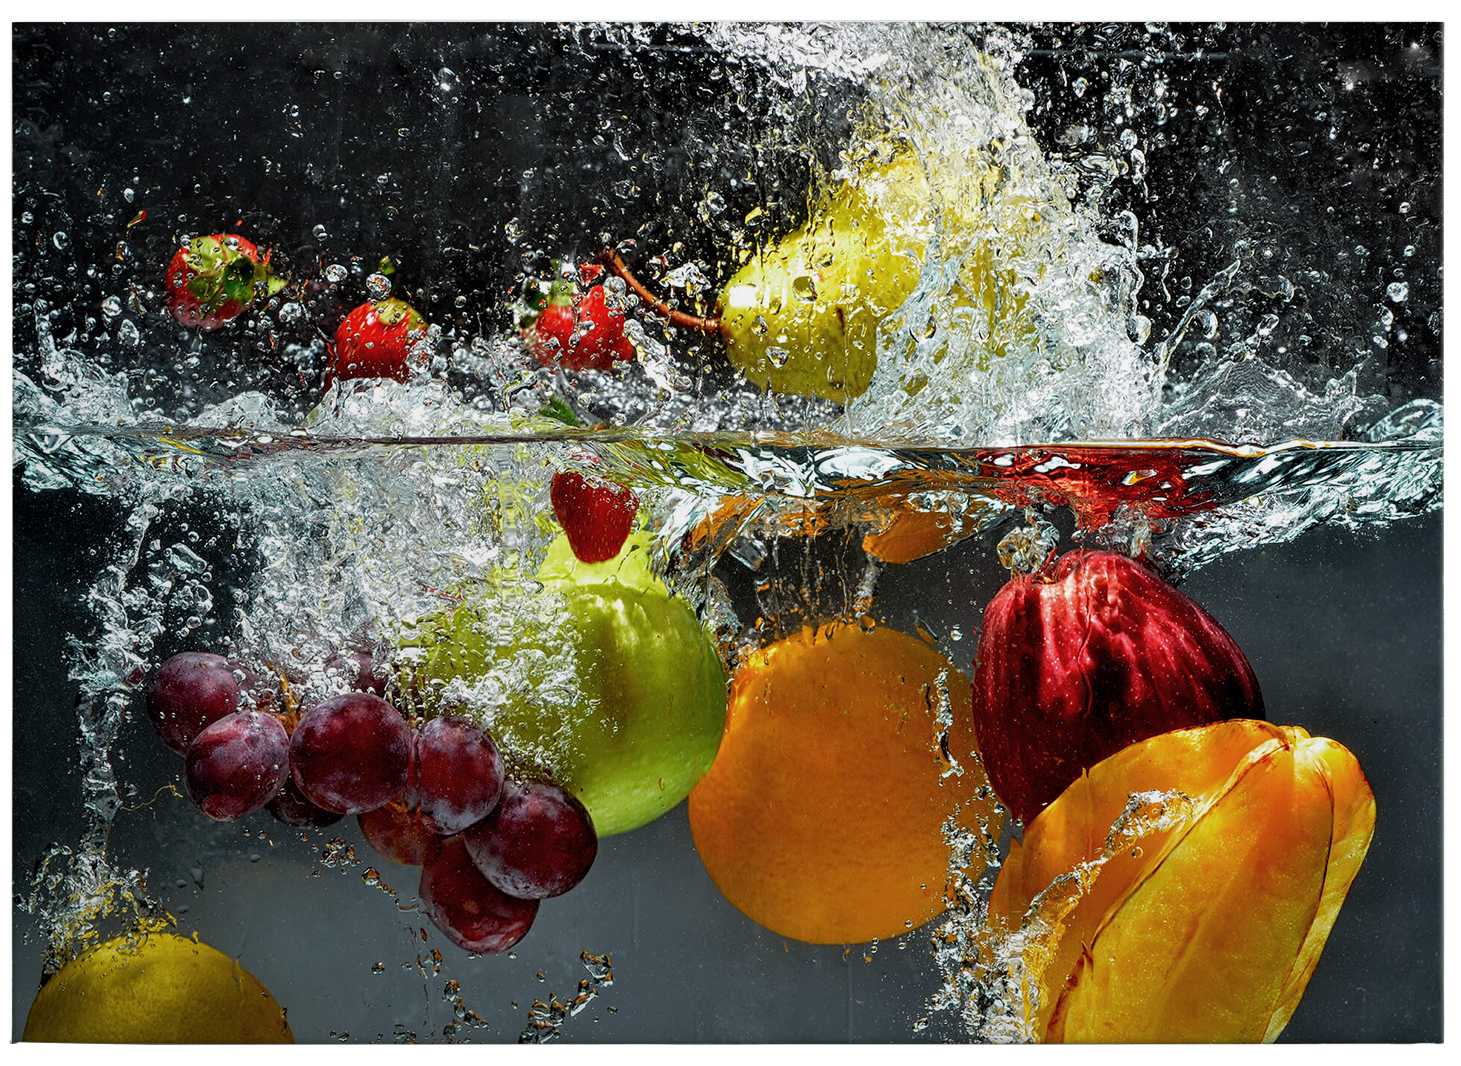             Tela che dipinge frutta fresca a bagnomaria - 0,70 m x 0,50 m
        